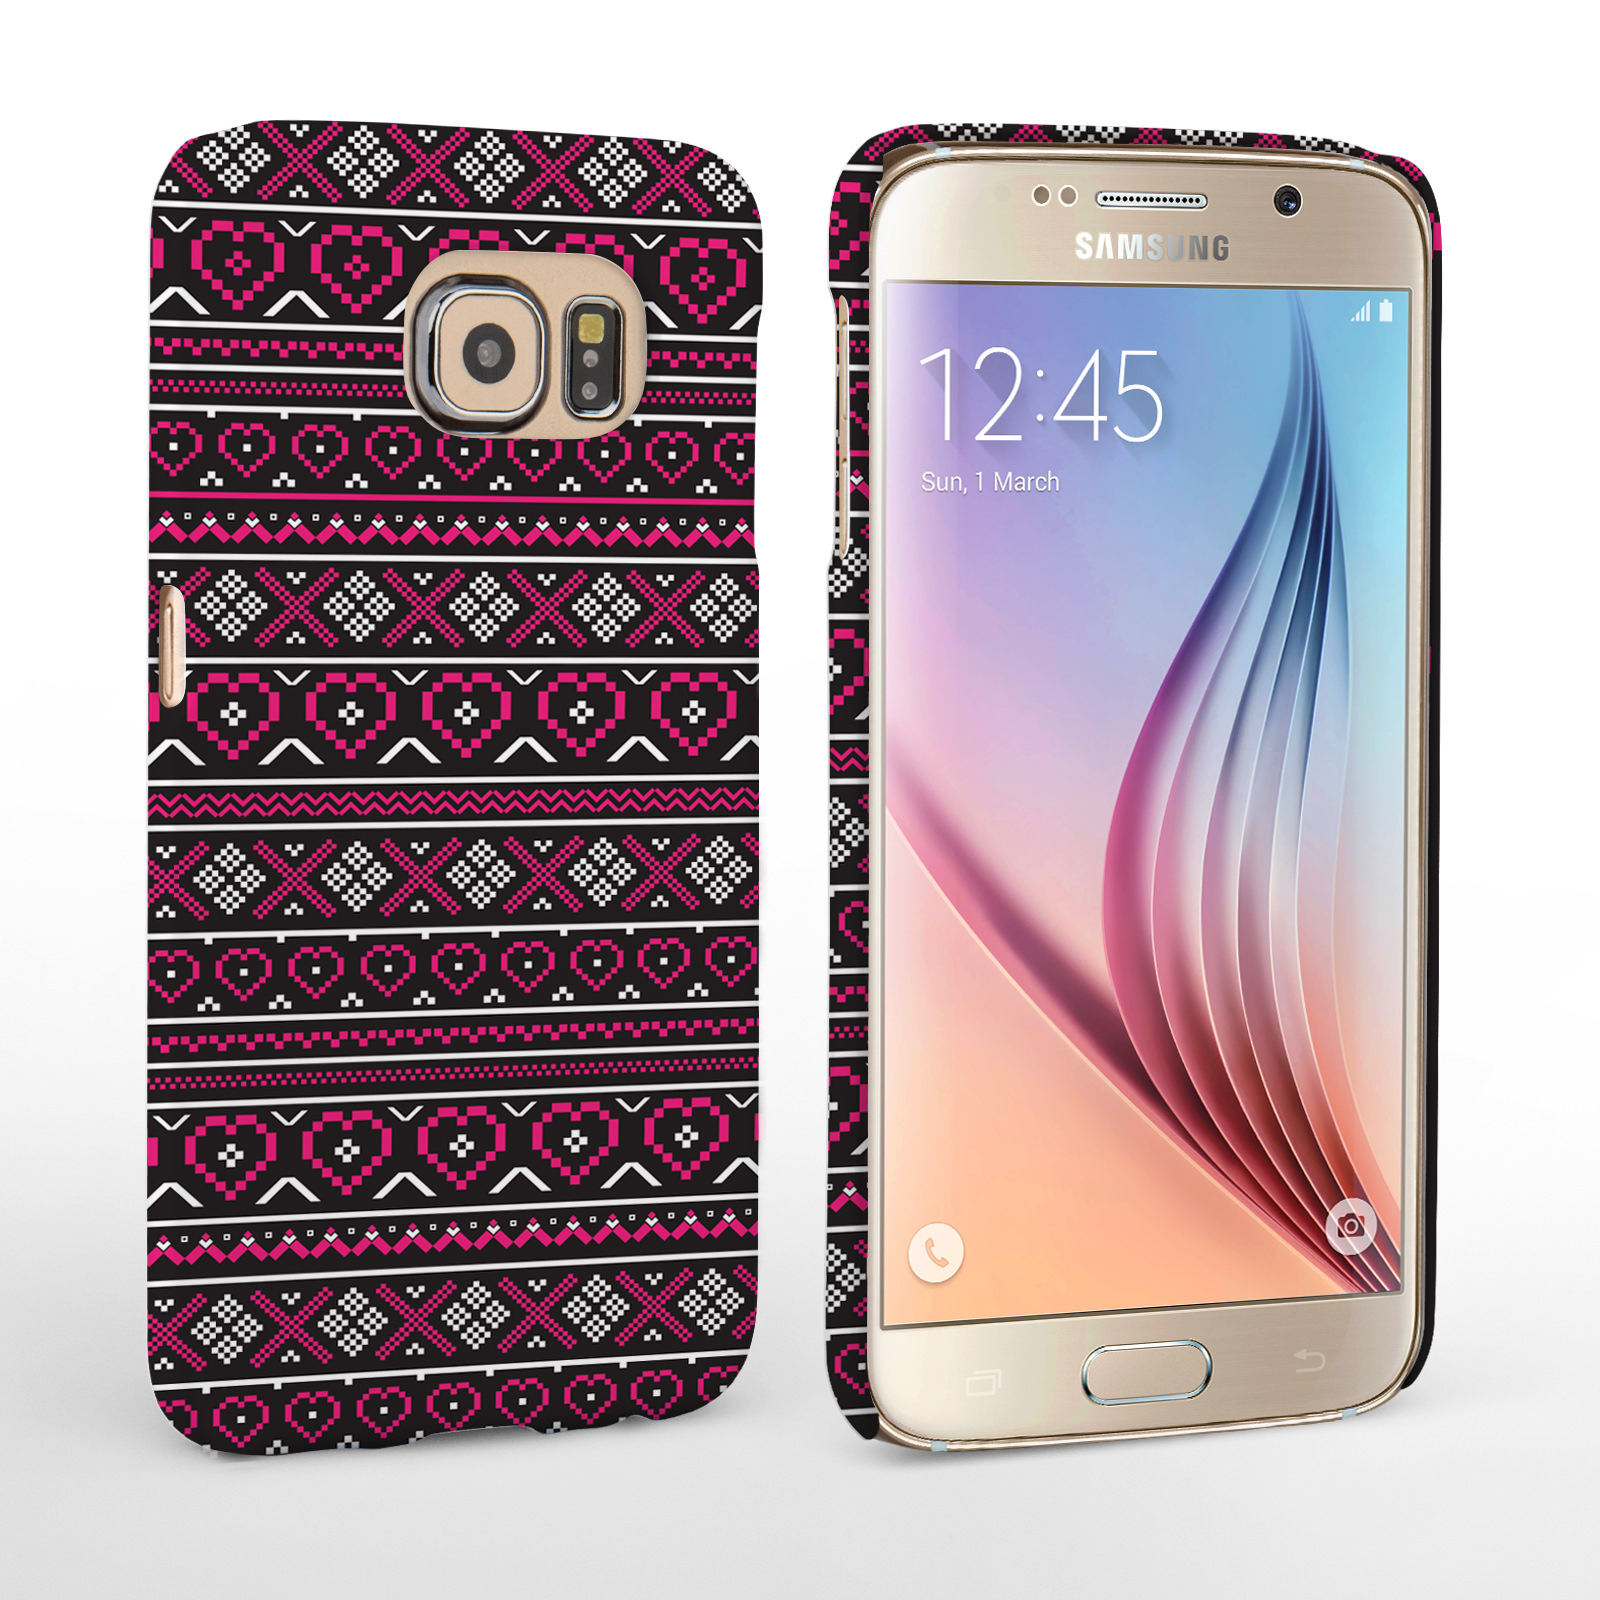 Caseflex Samsung Galaxy S6 Fairisle Case – Pink and Black